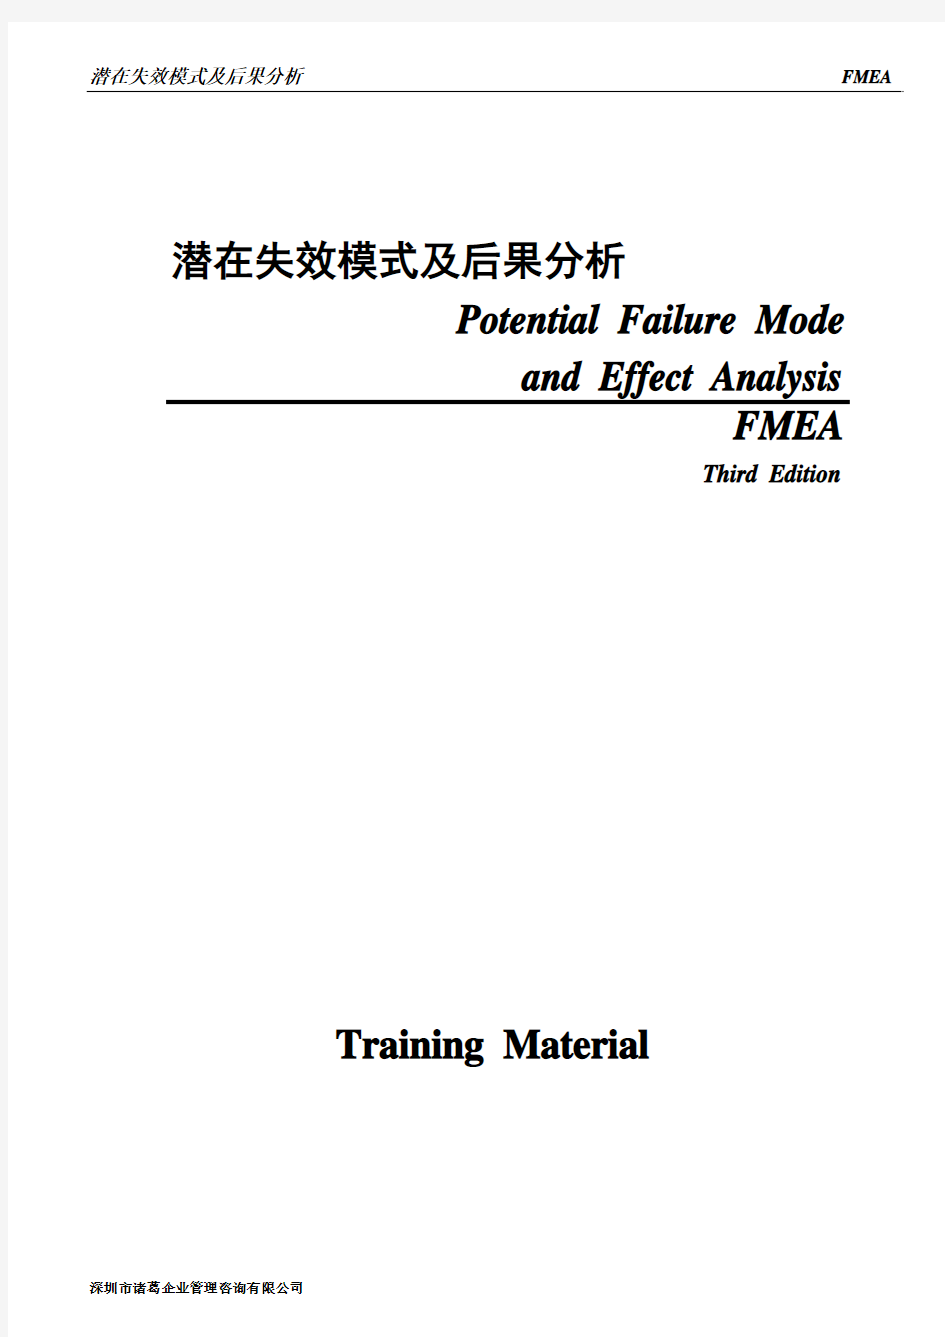 [6]-TS16949 FMEA training materials(Rev.3)(ok)